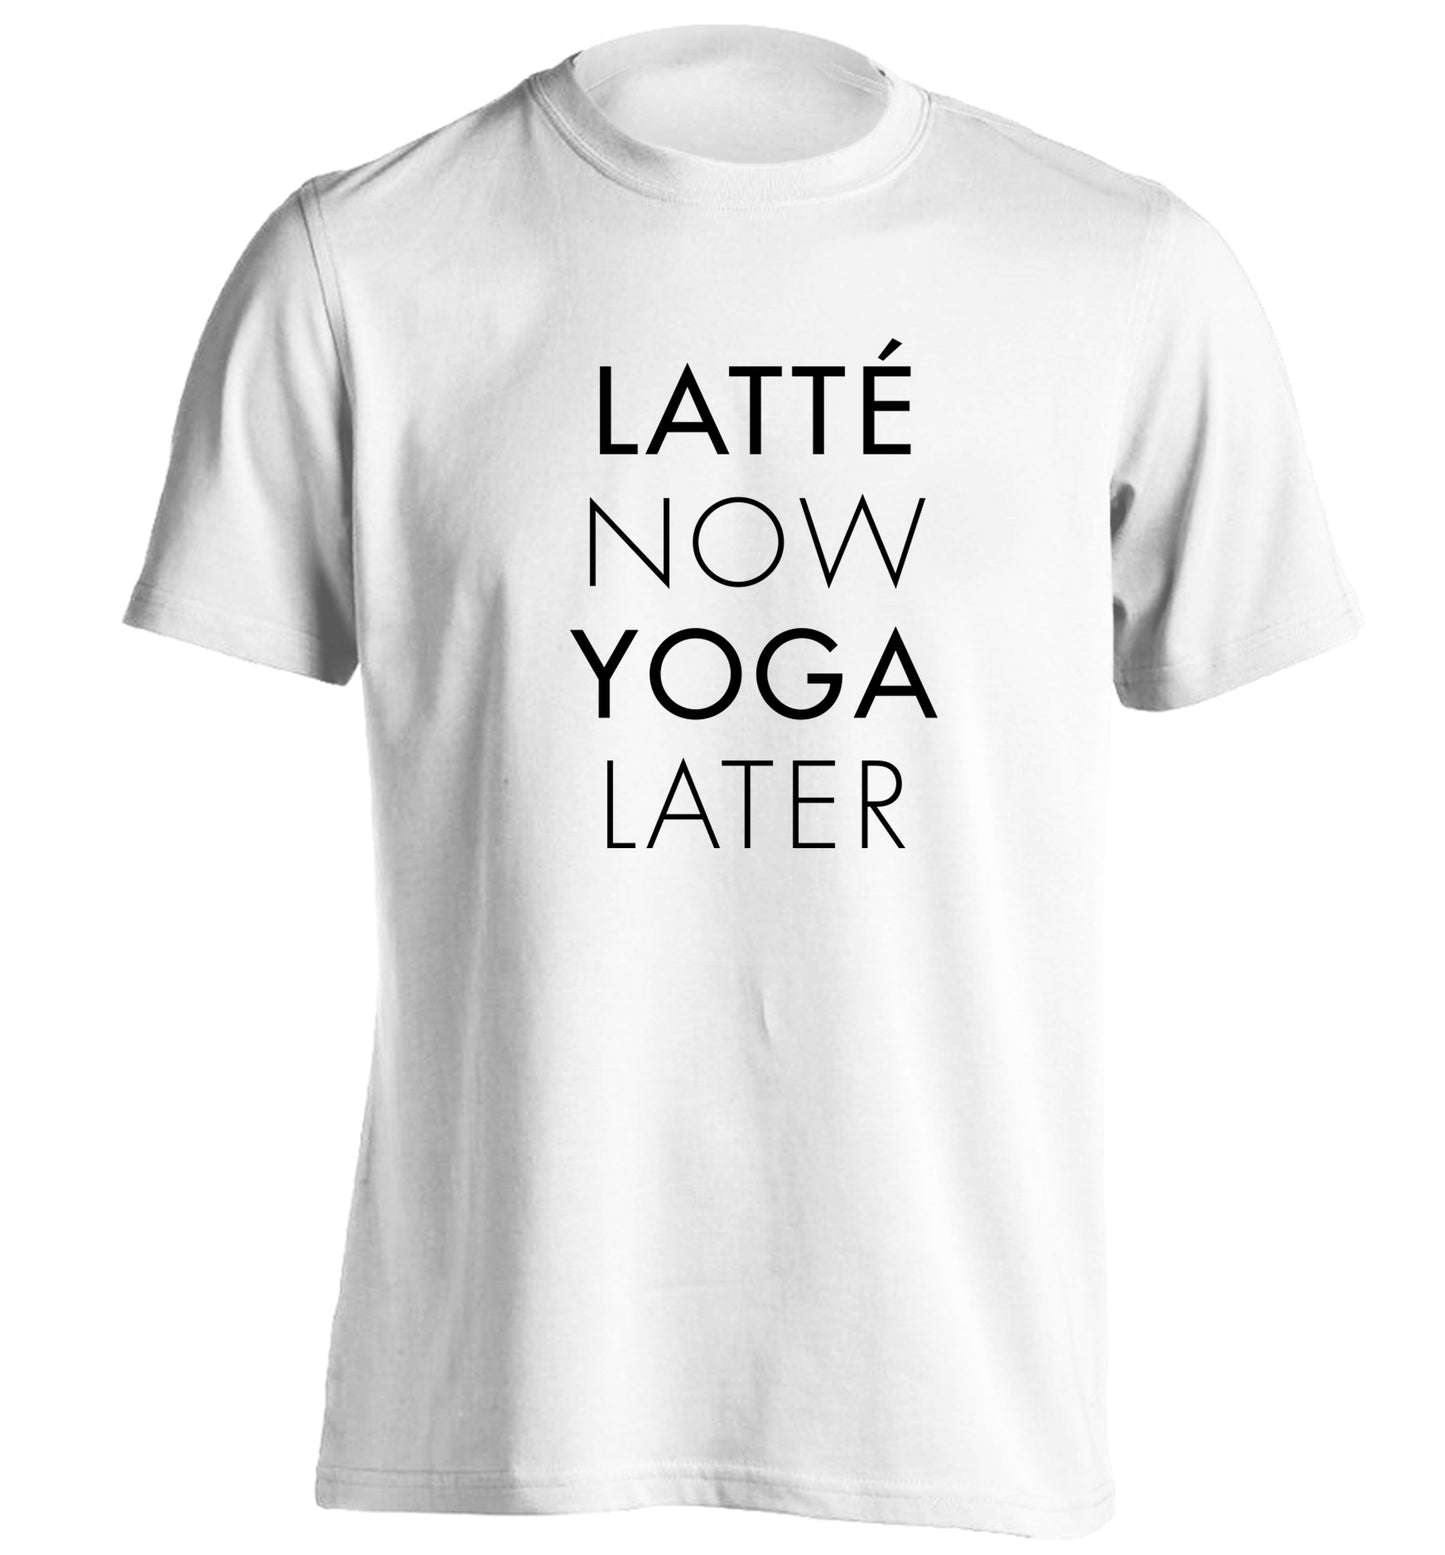 Latte now yoga later adults unisex white Tshirt 2XL